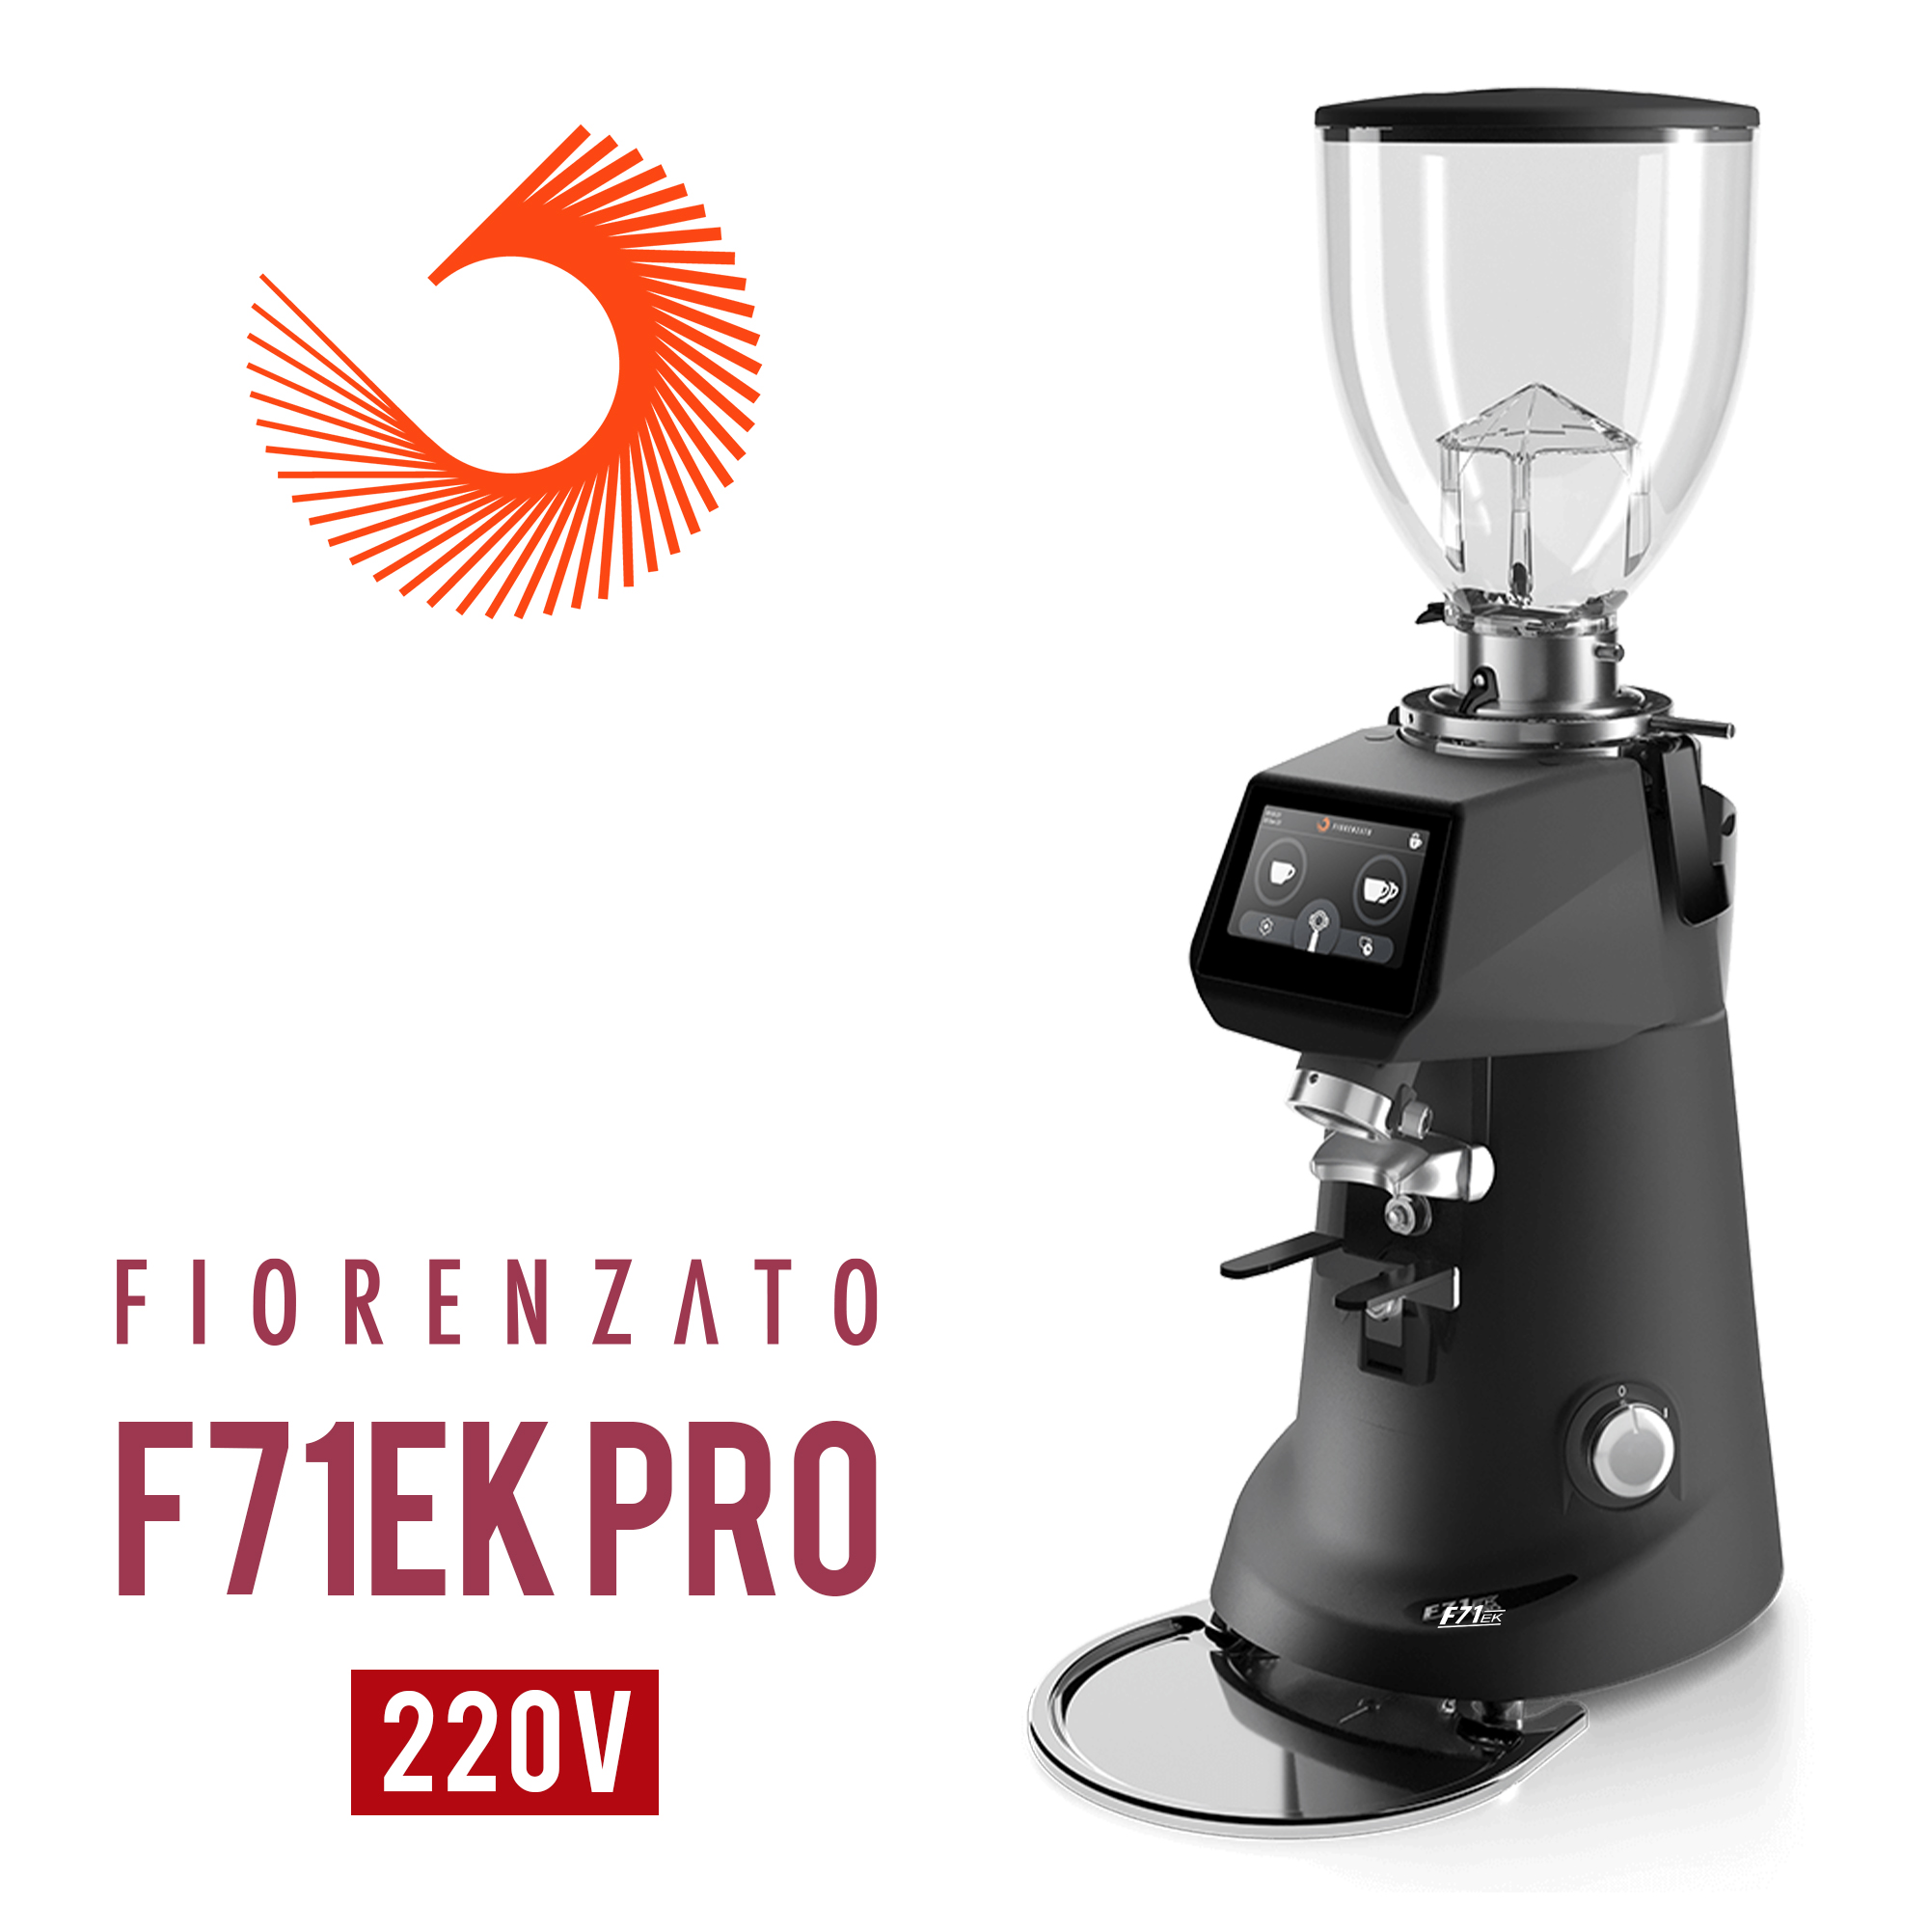 Fiorenzato F71EK PRO 營業用磨豆機 錐刀 220V 霧黑  |Fiorenzato 磨豆機